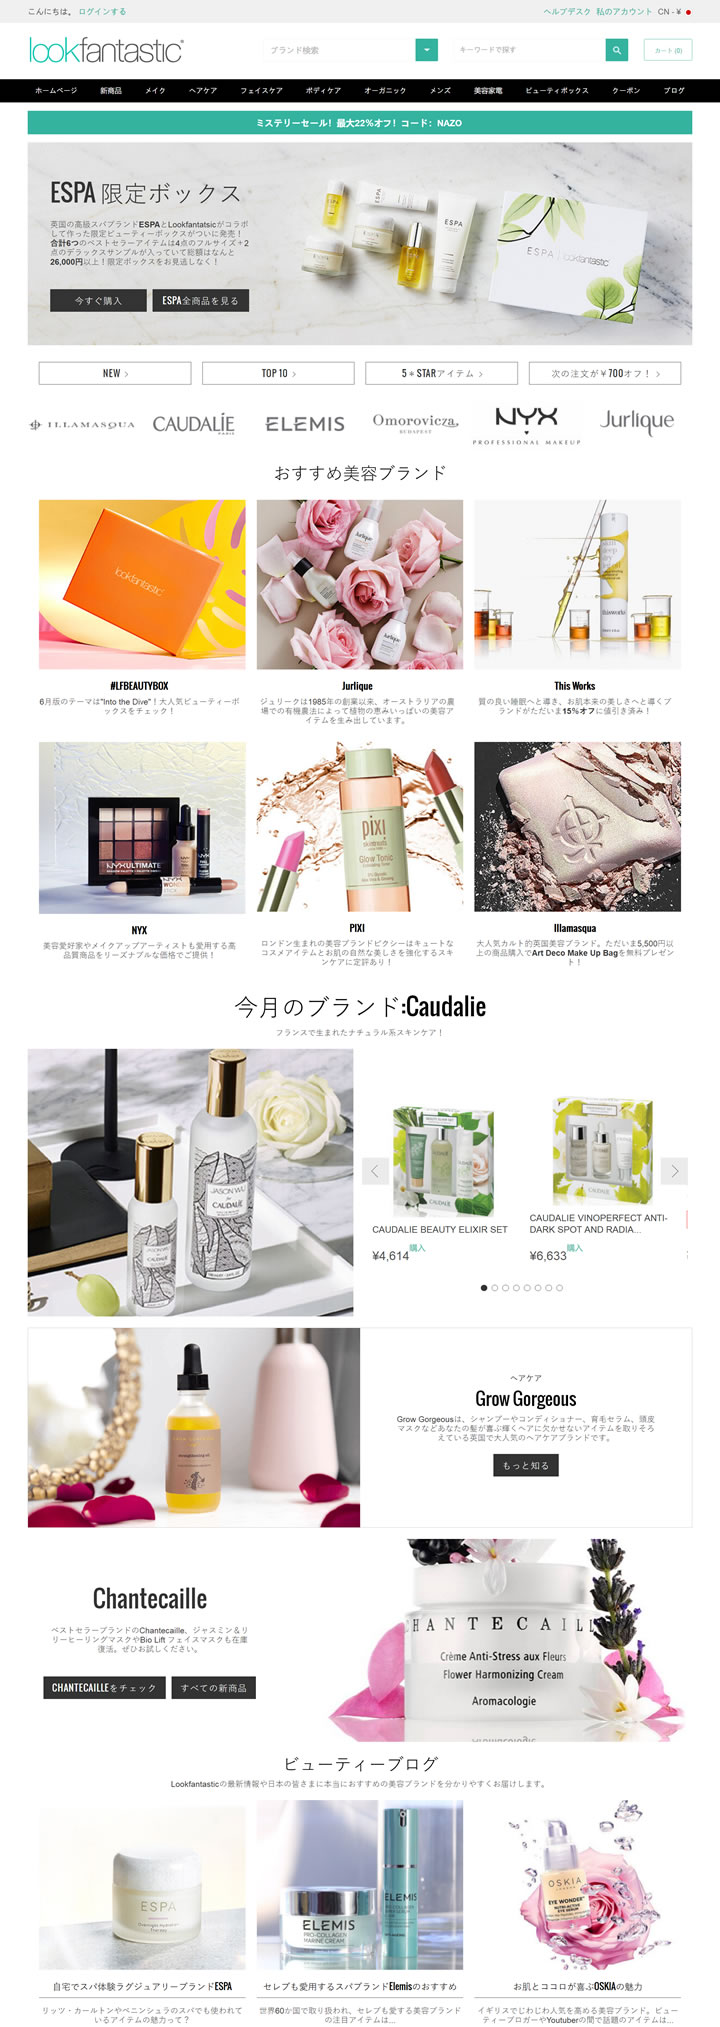 Lookfantastic Japan: UK Famous Beauty Shopping Site